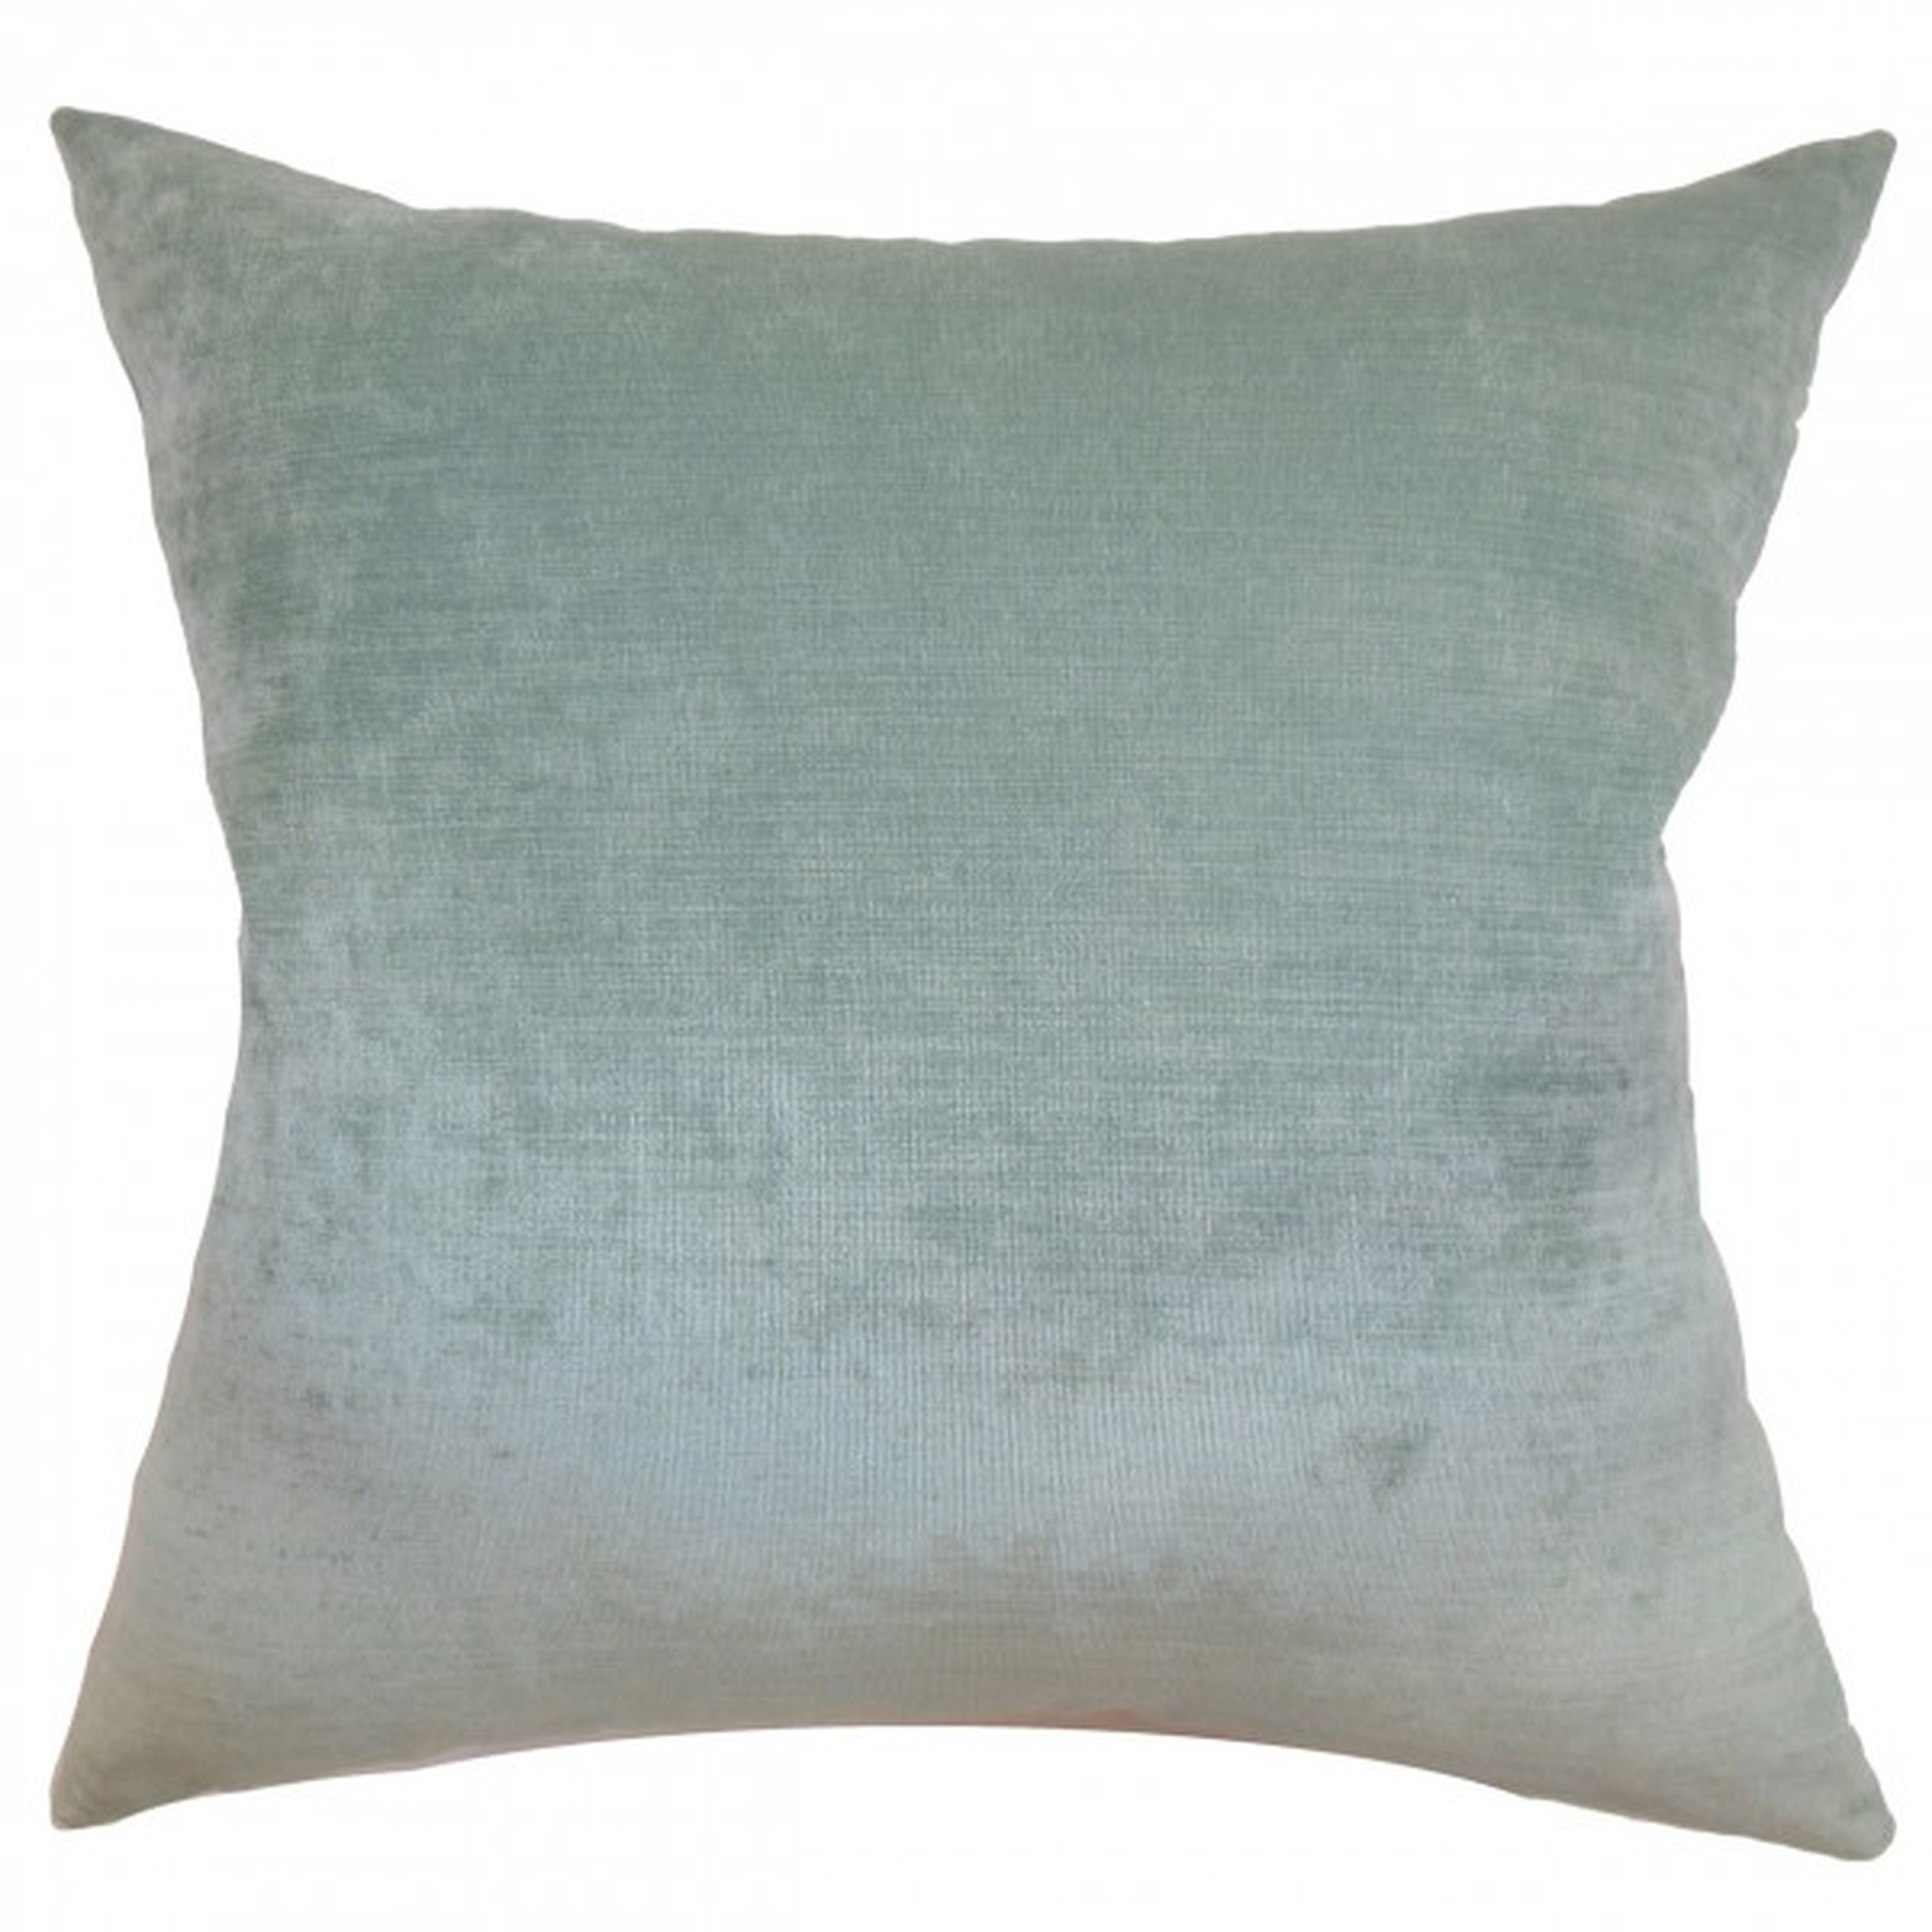 Haye Solid Pillow - 18" x 18" - Down Insert - Linen & Seam